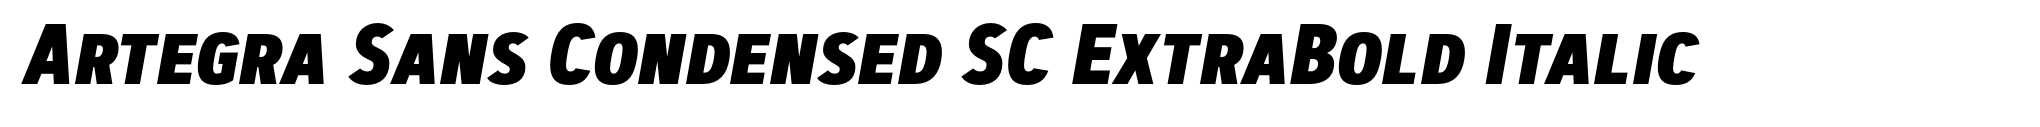 Artegra Sans Condensed SC ExtraBold Italic image